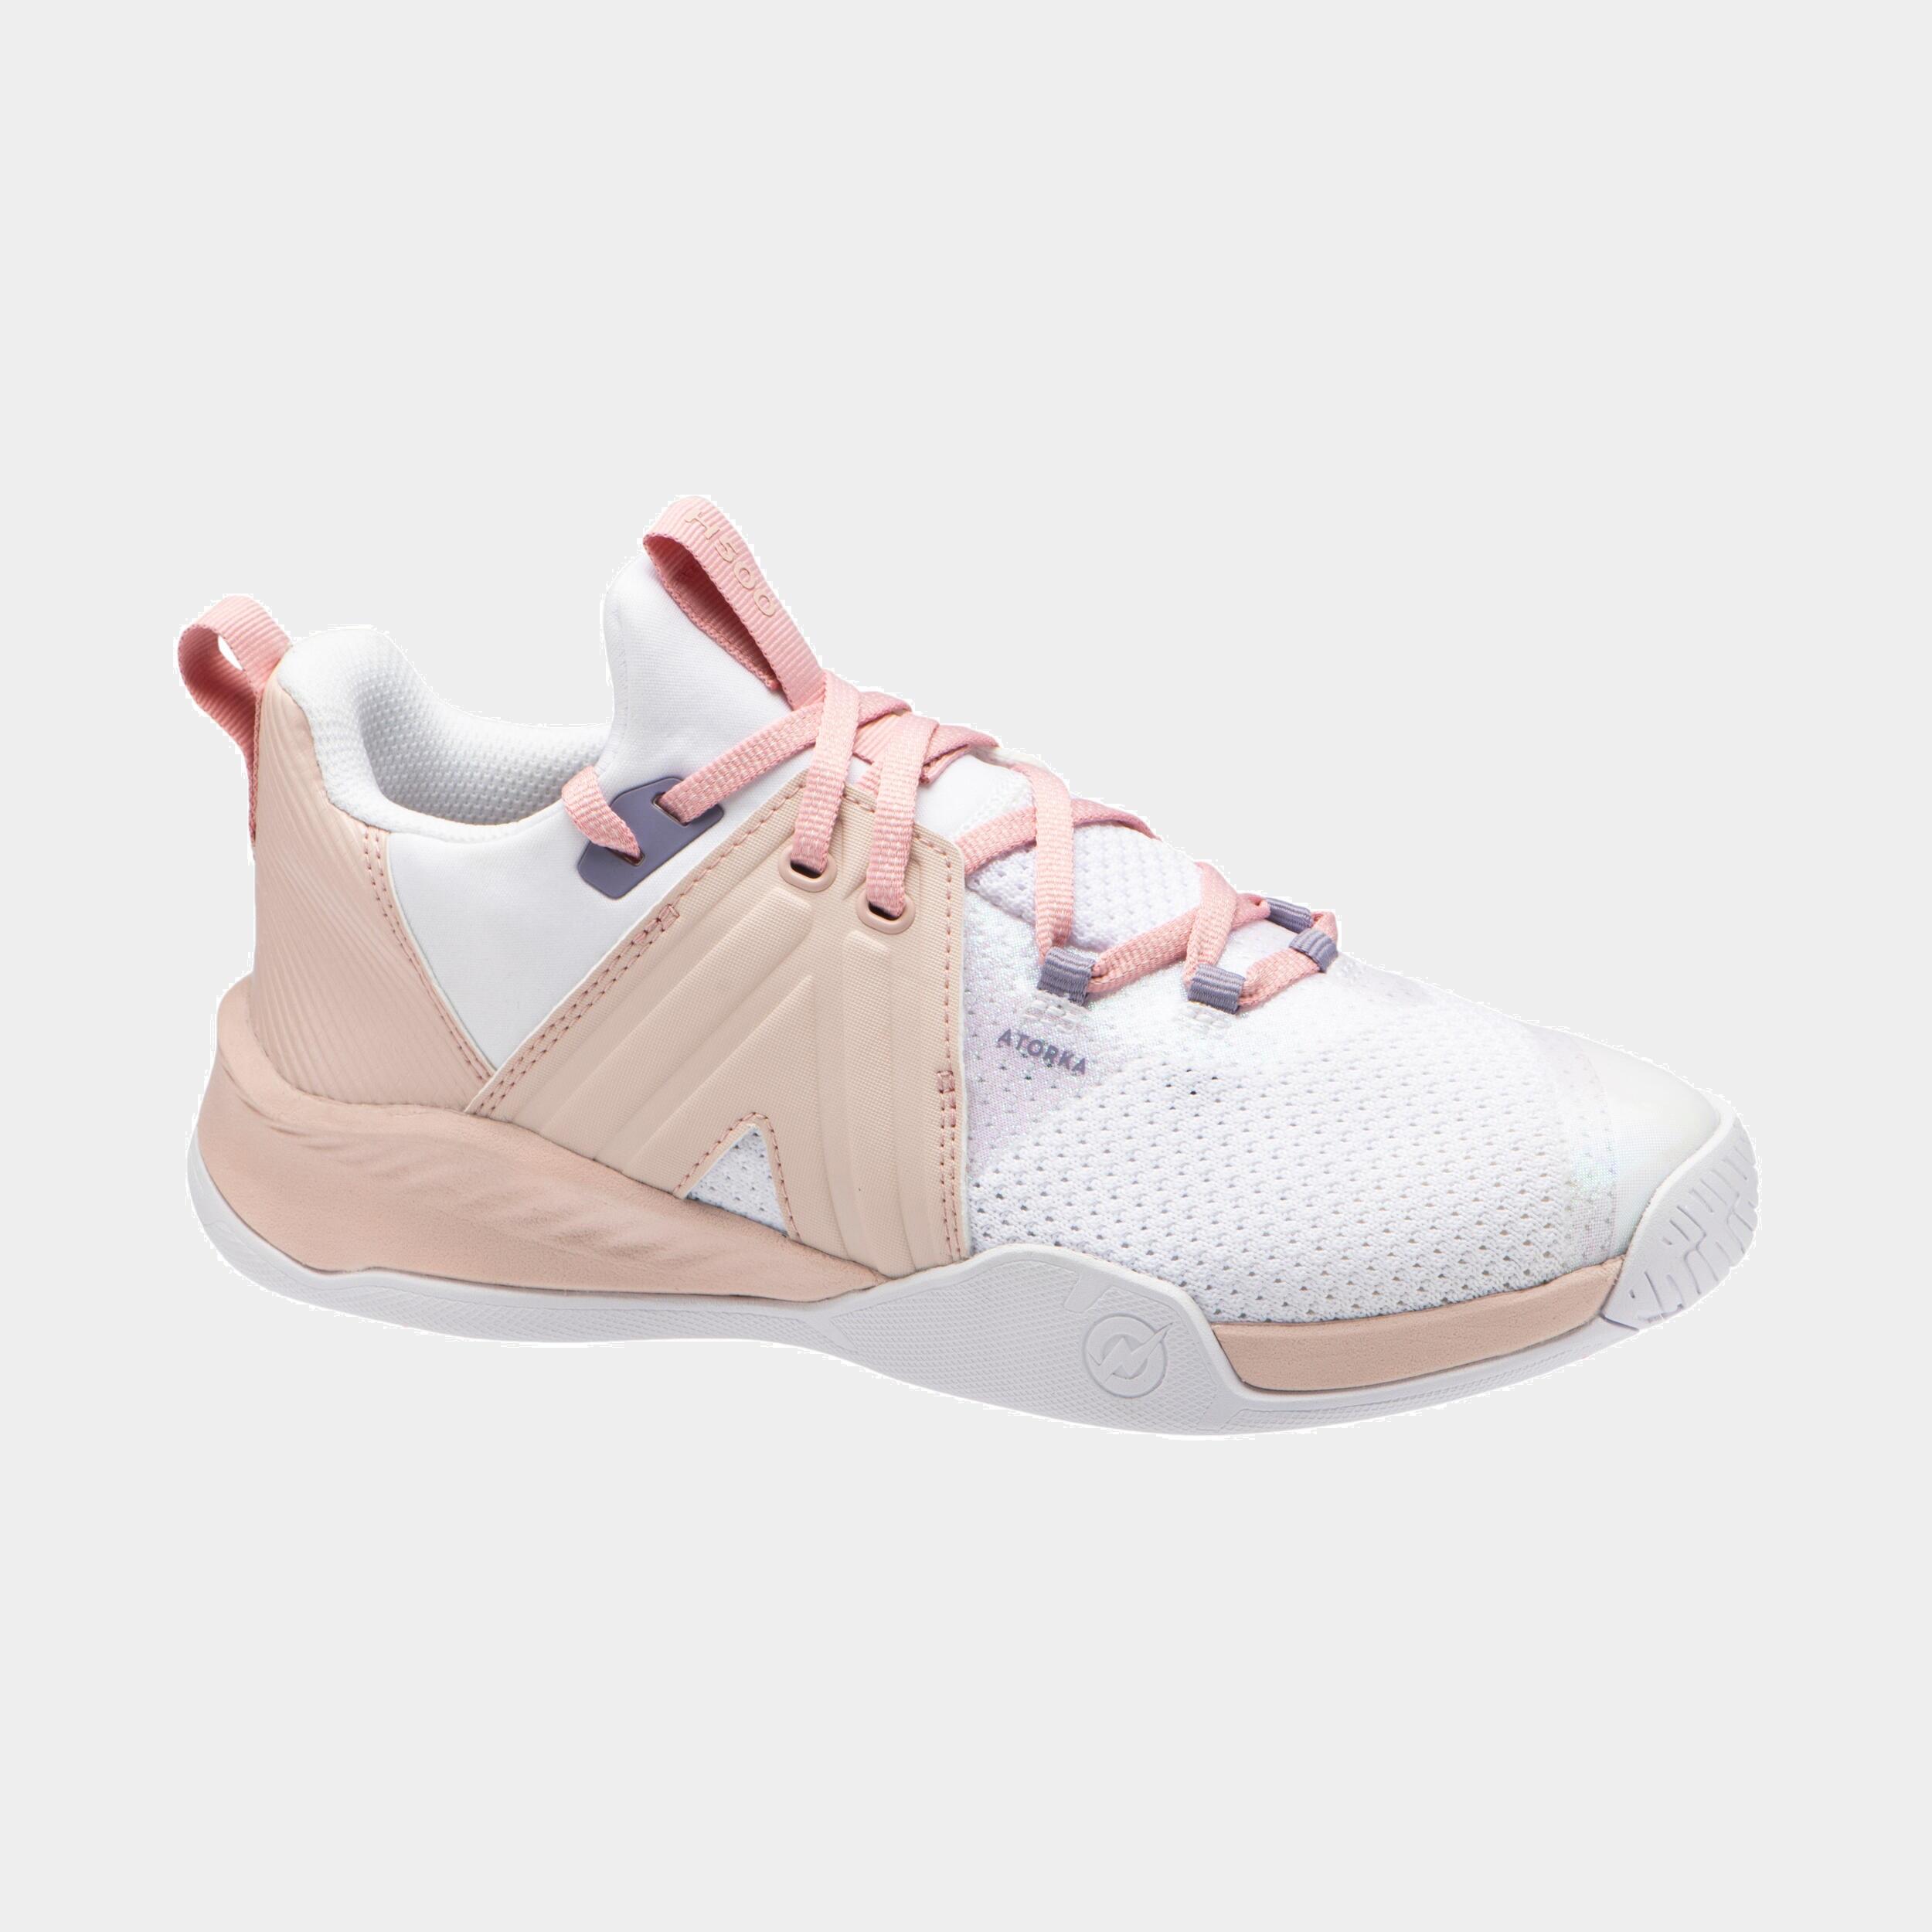 Men's/Women's Handball Shoes H500 Faster - Pink/White 1/17